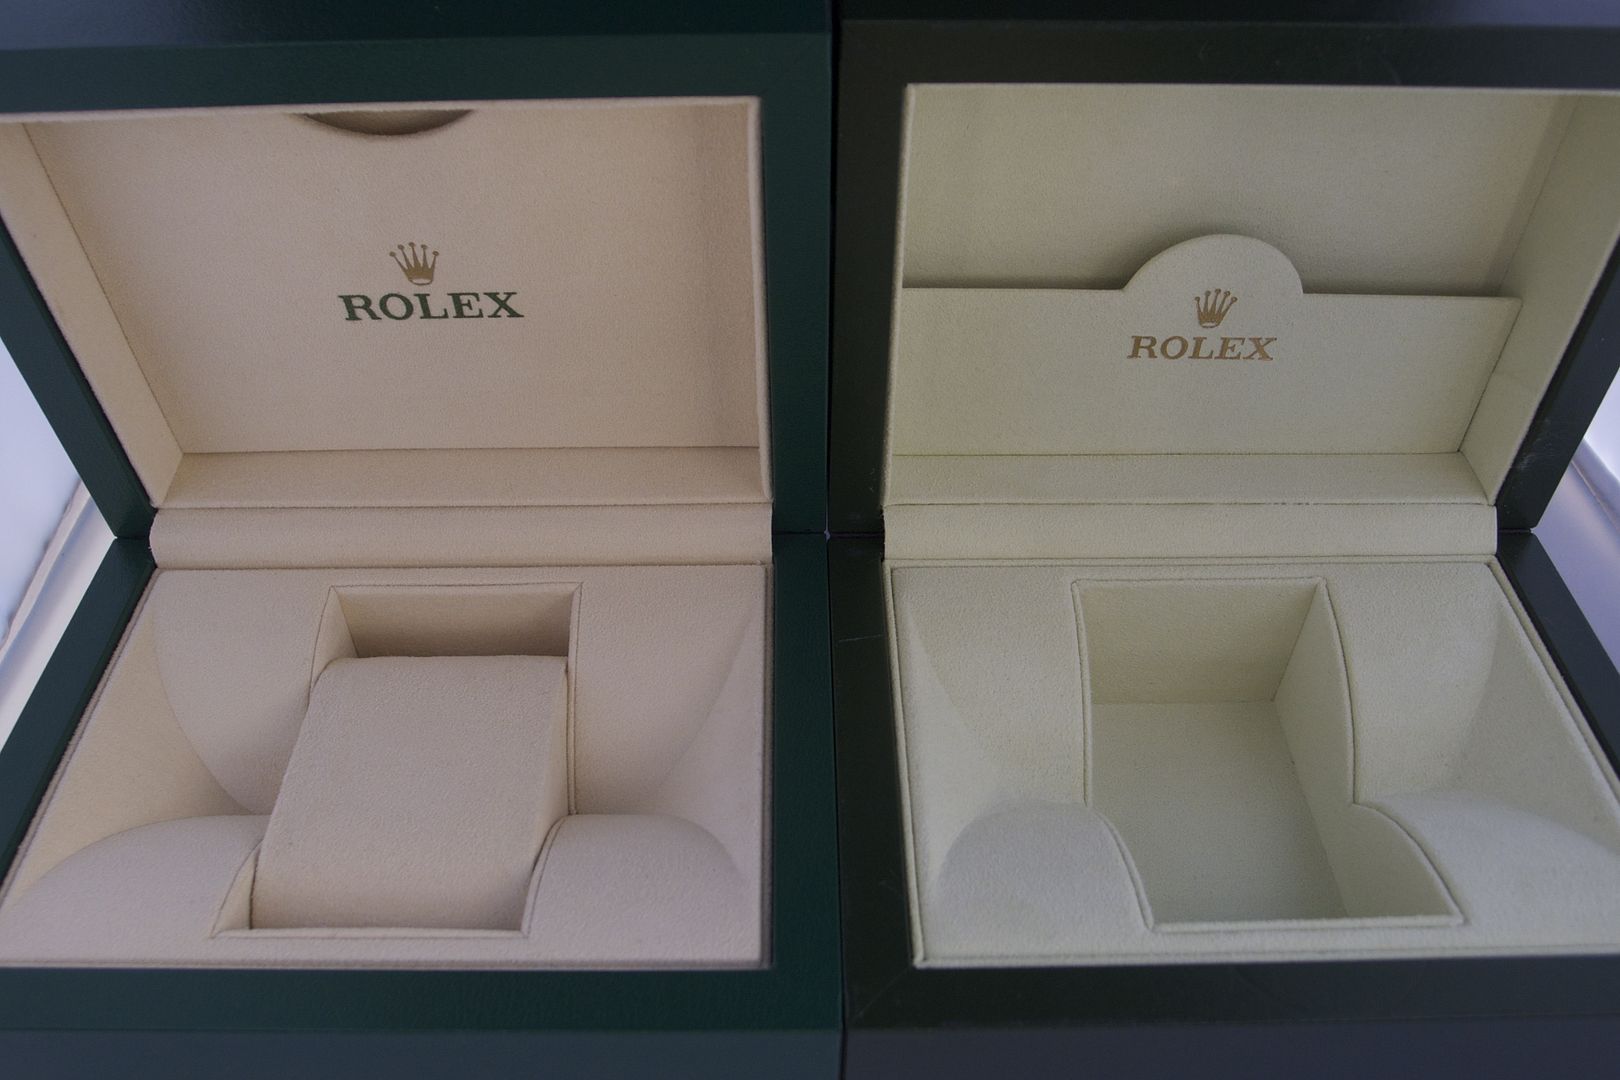  Rolex box change: inside color change